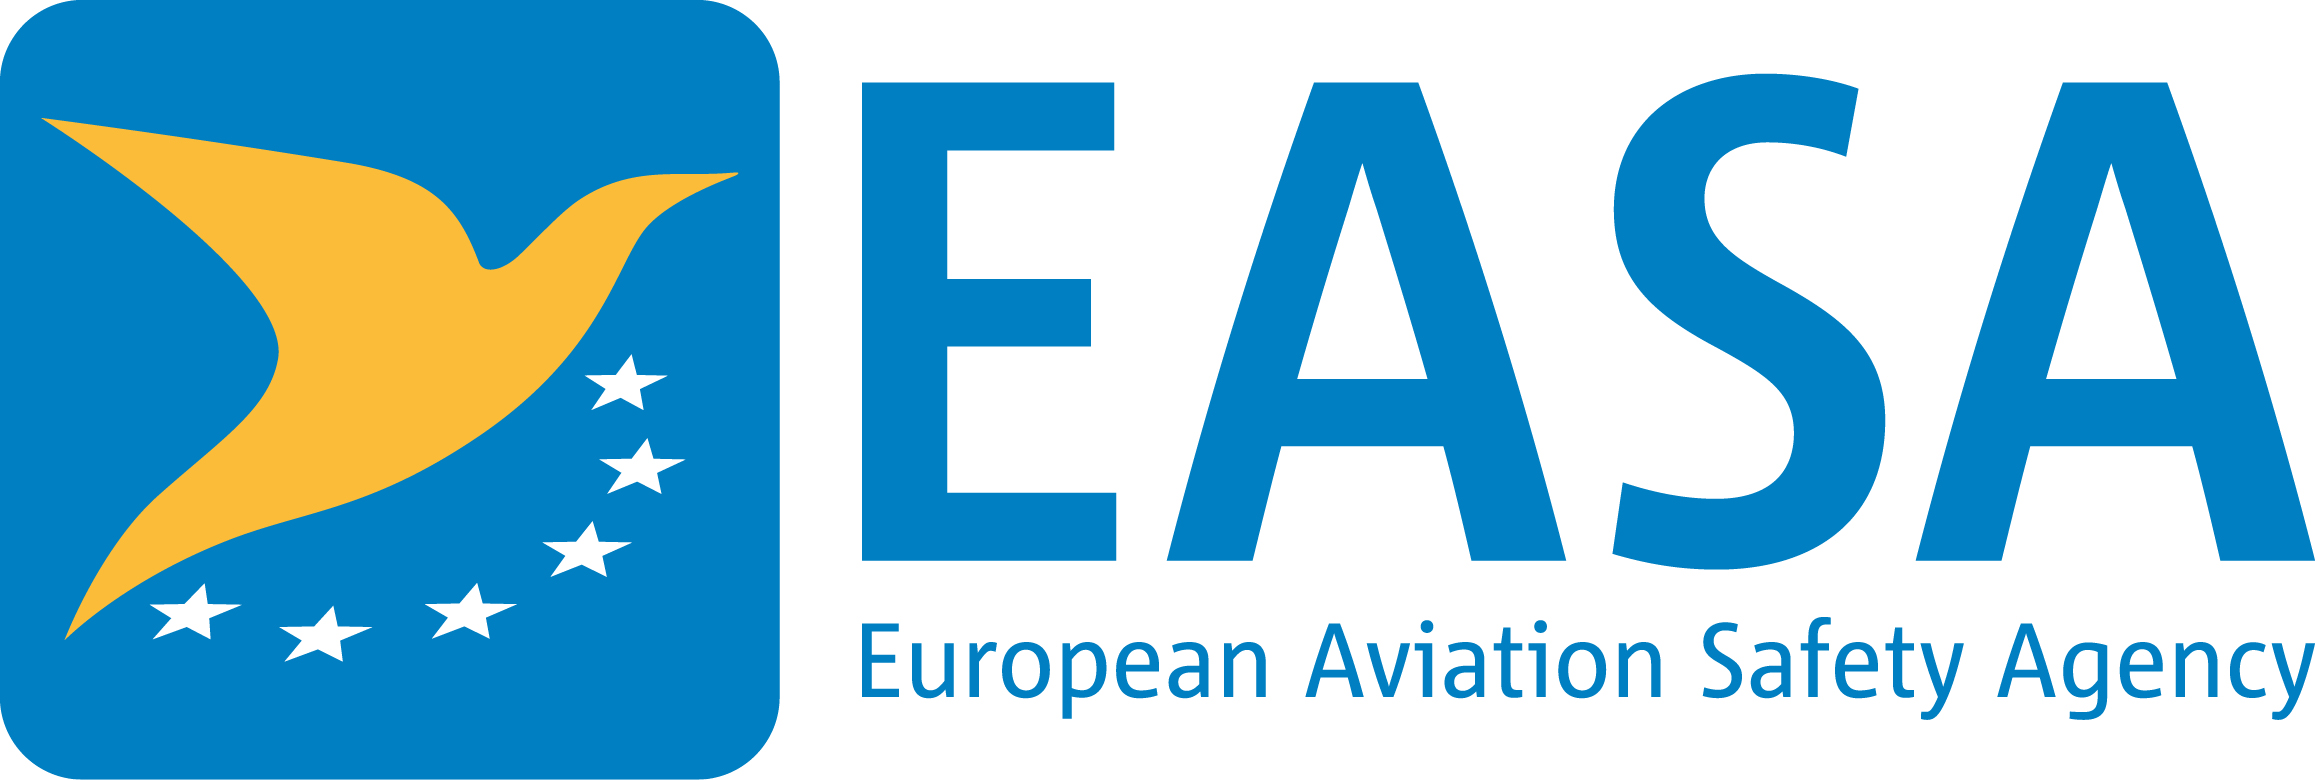 EASA_Logo jpg white background